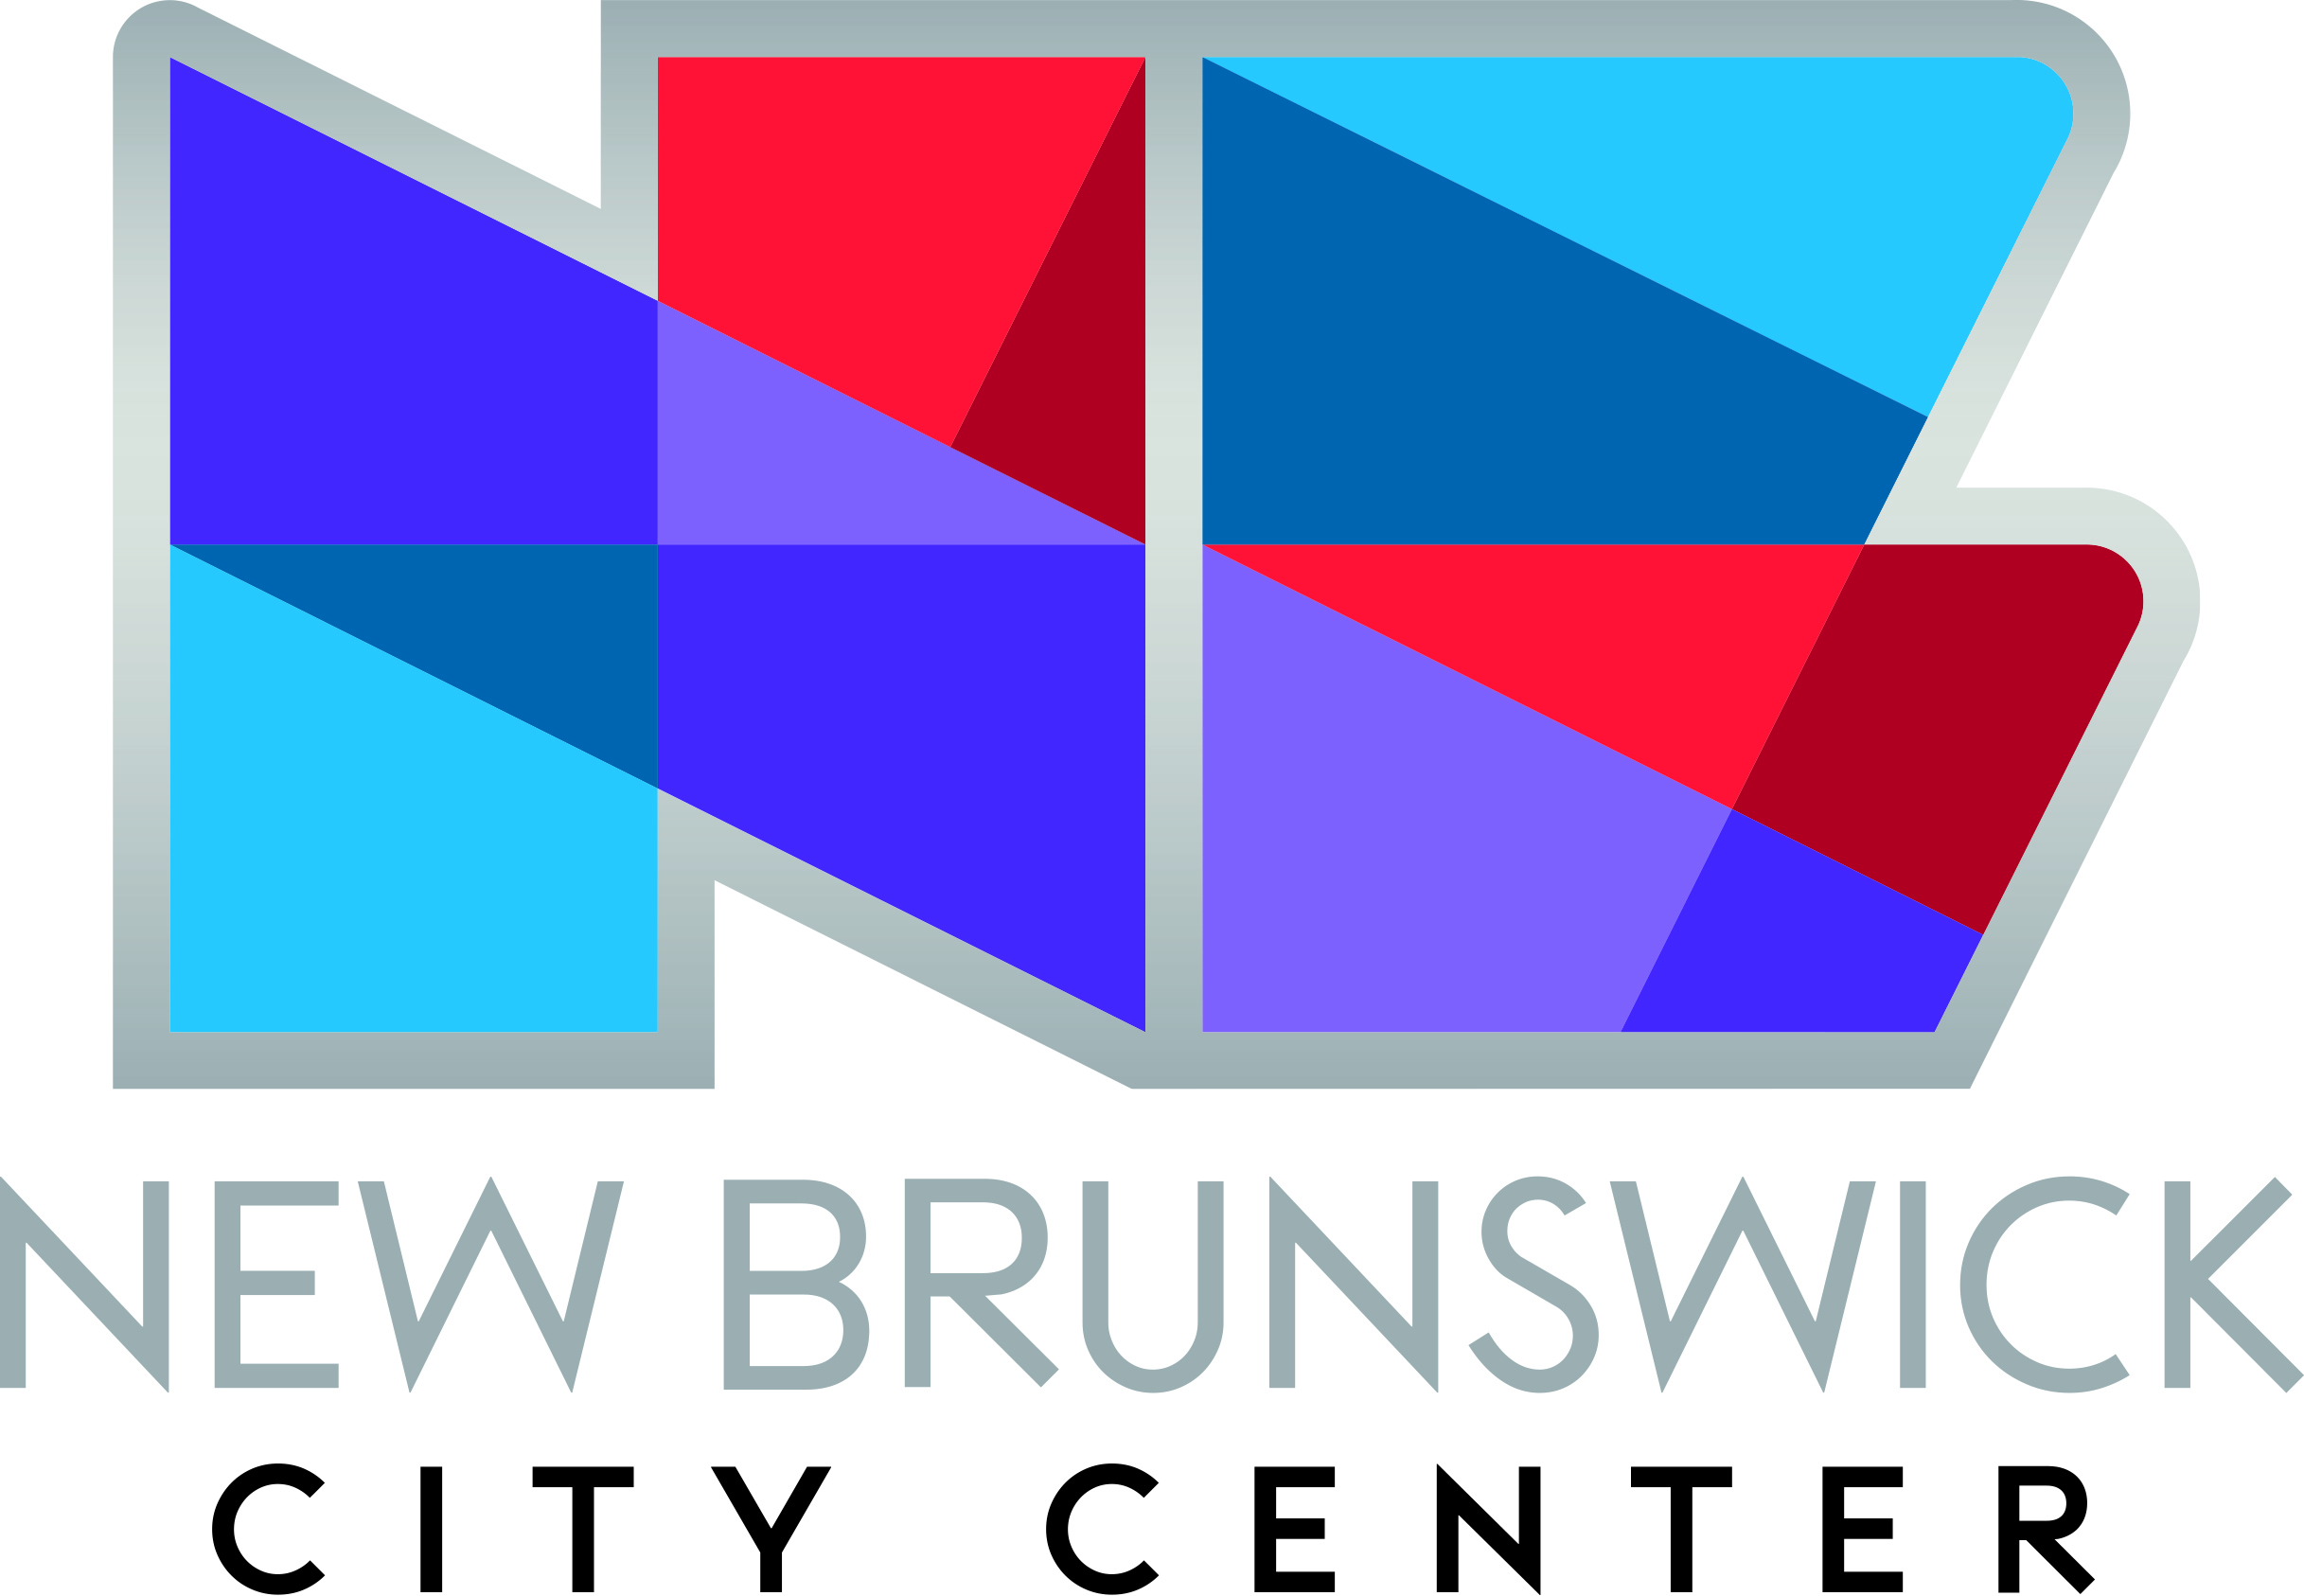 New Brunswick City Center